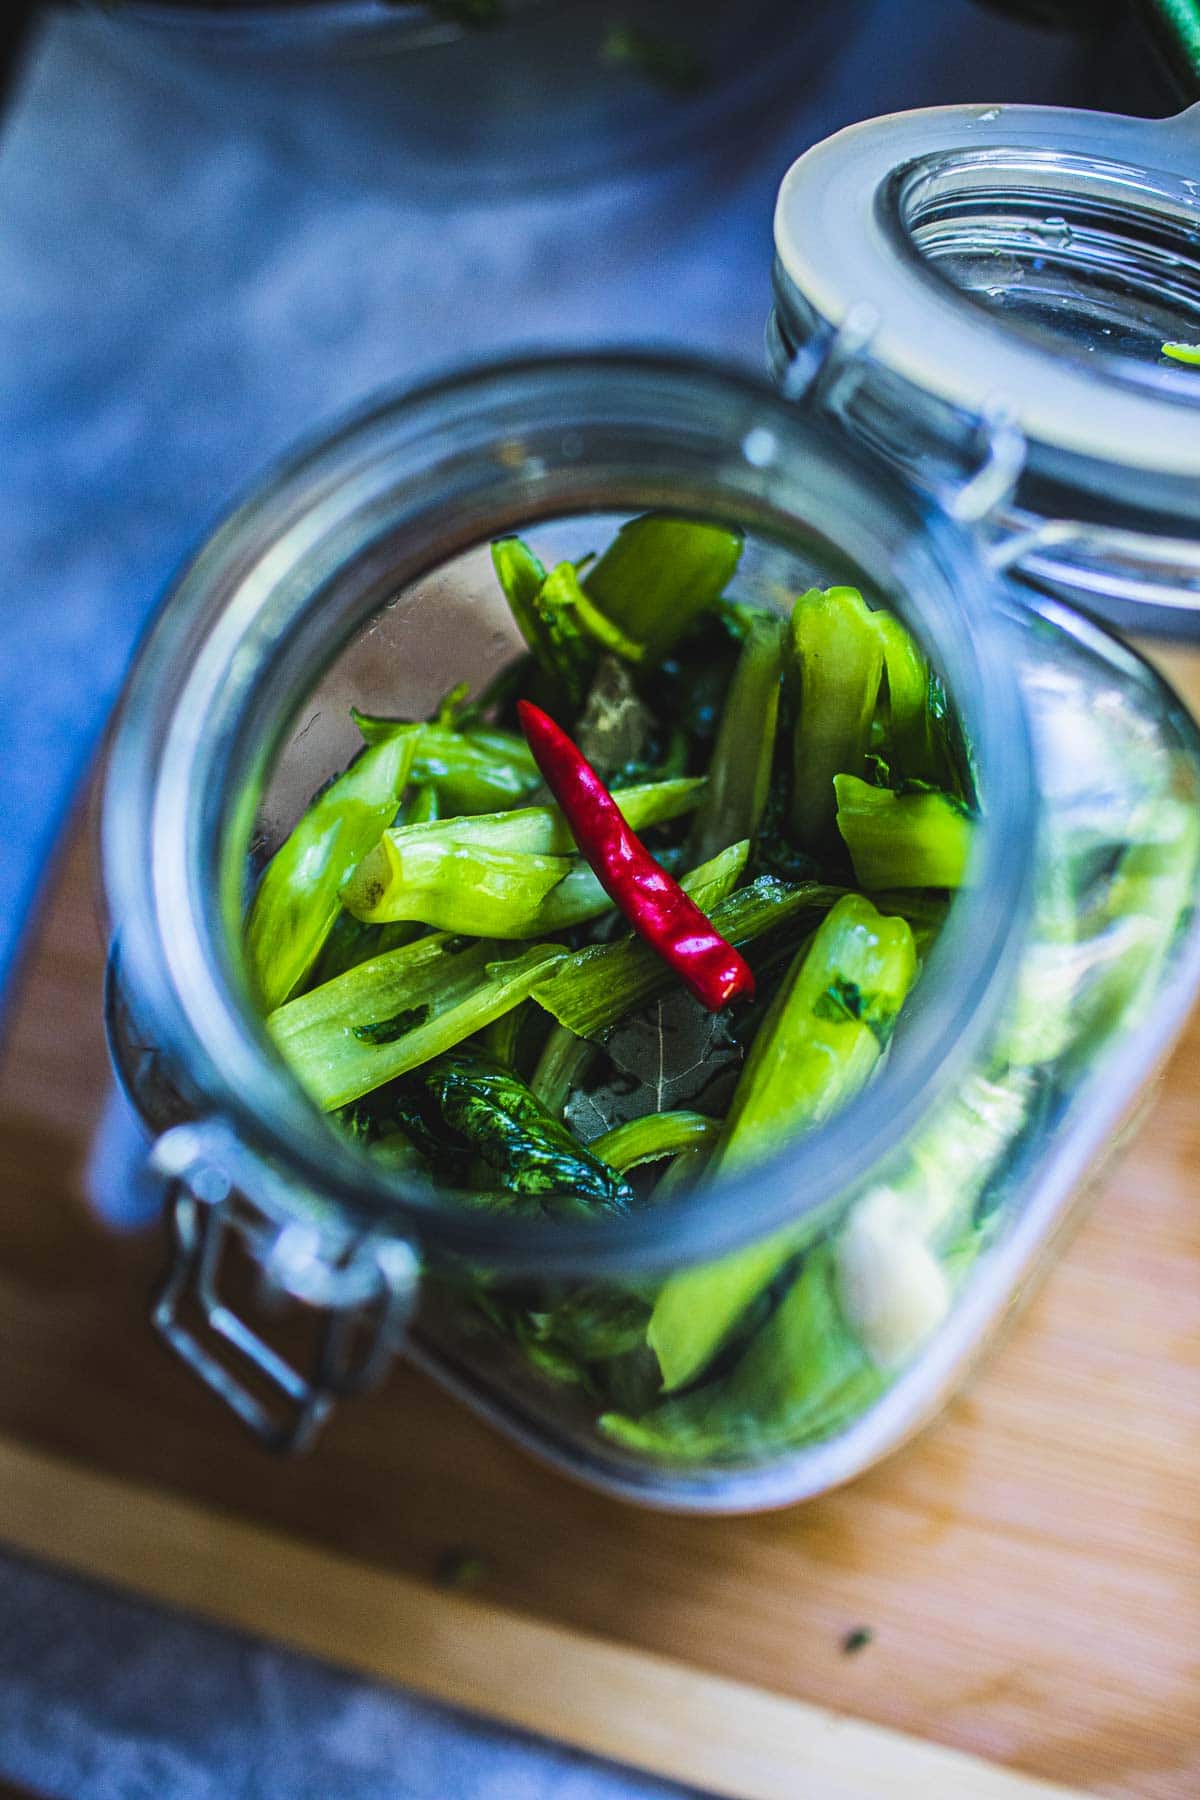 pickled mustard greens in a glass jar